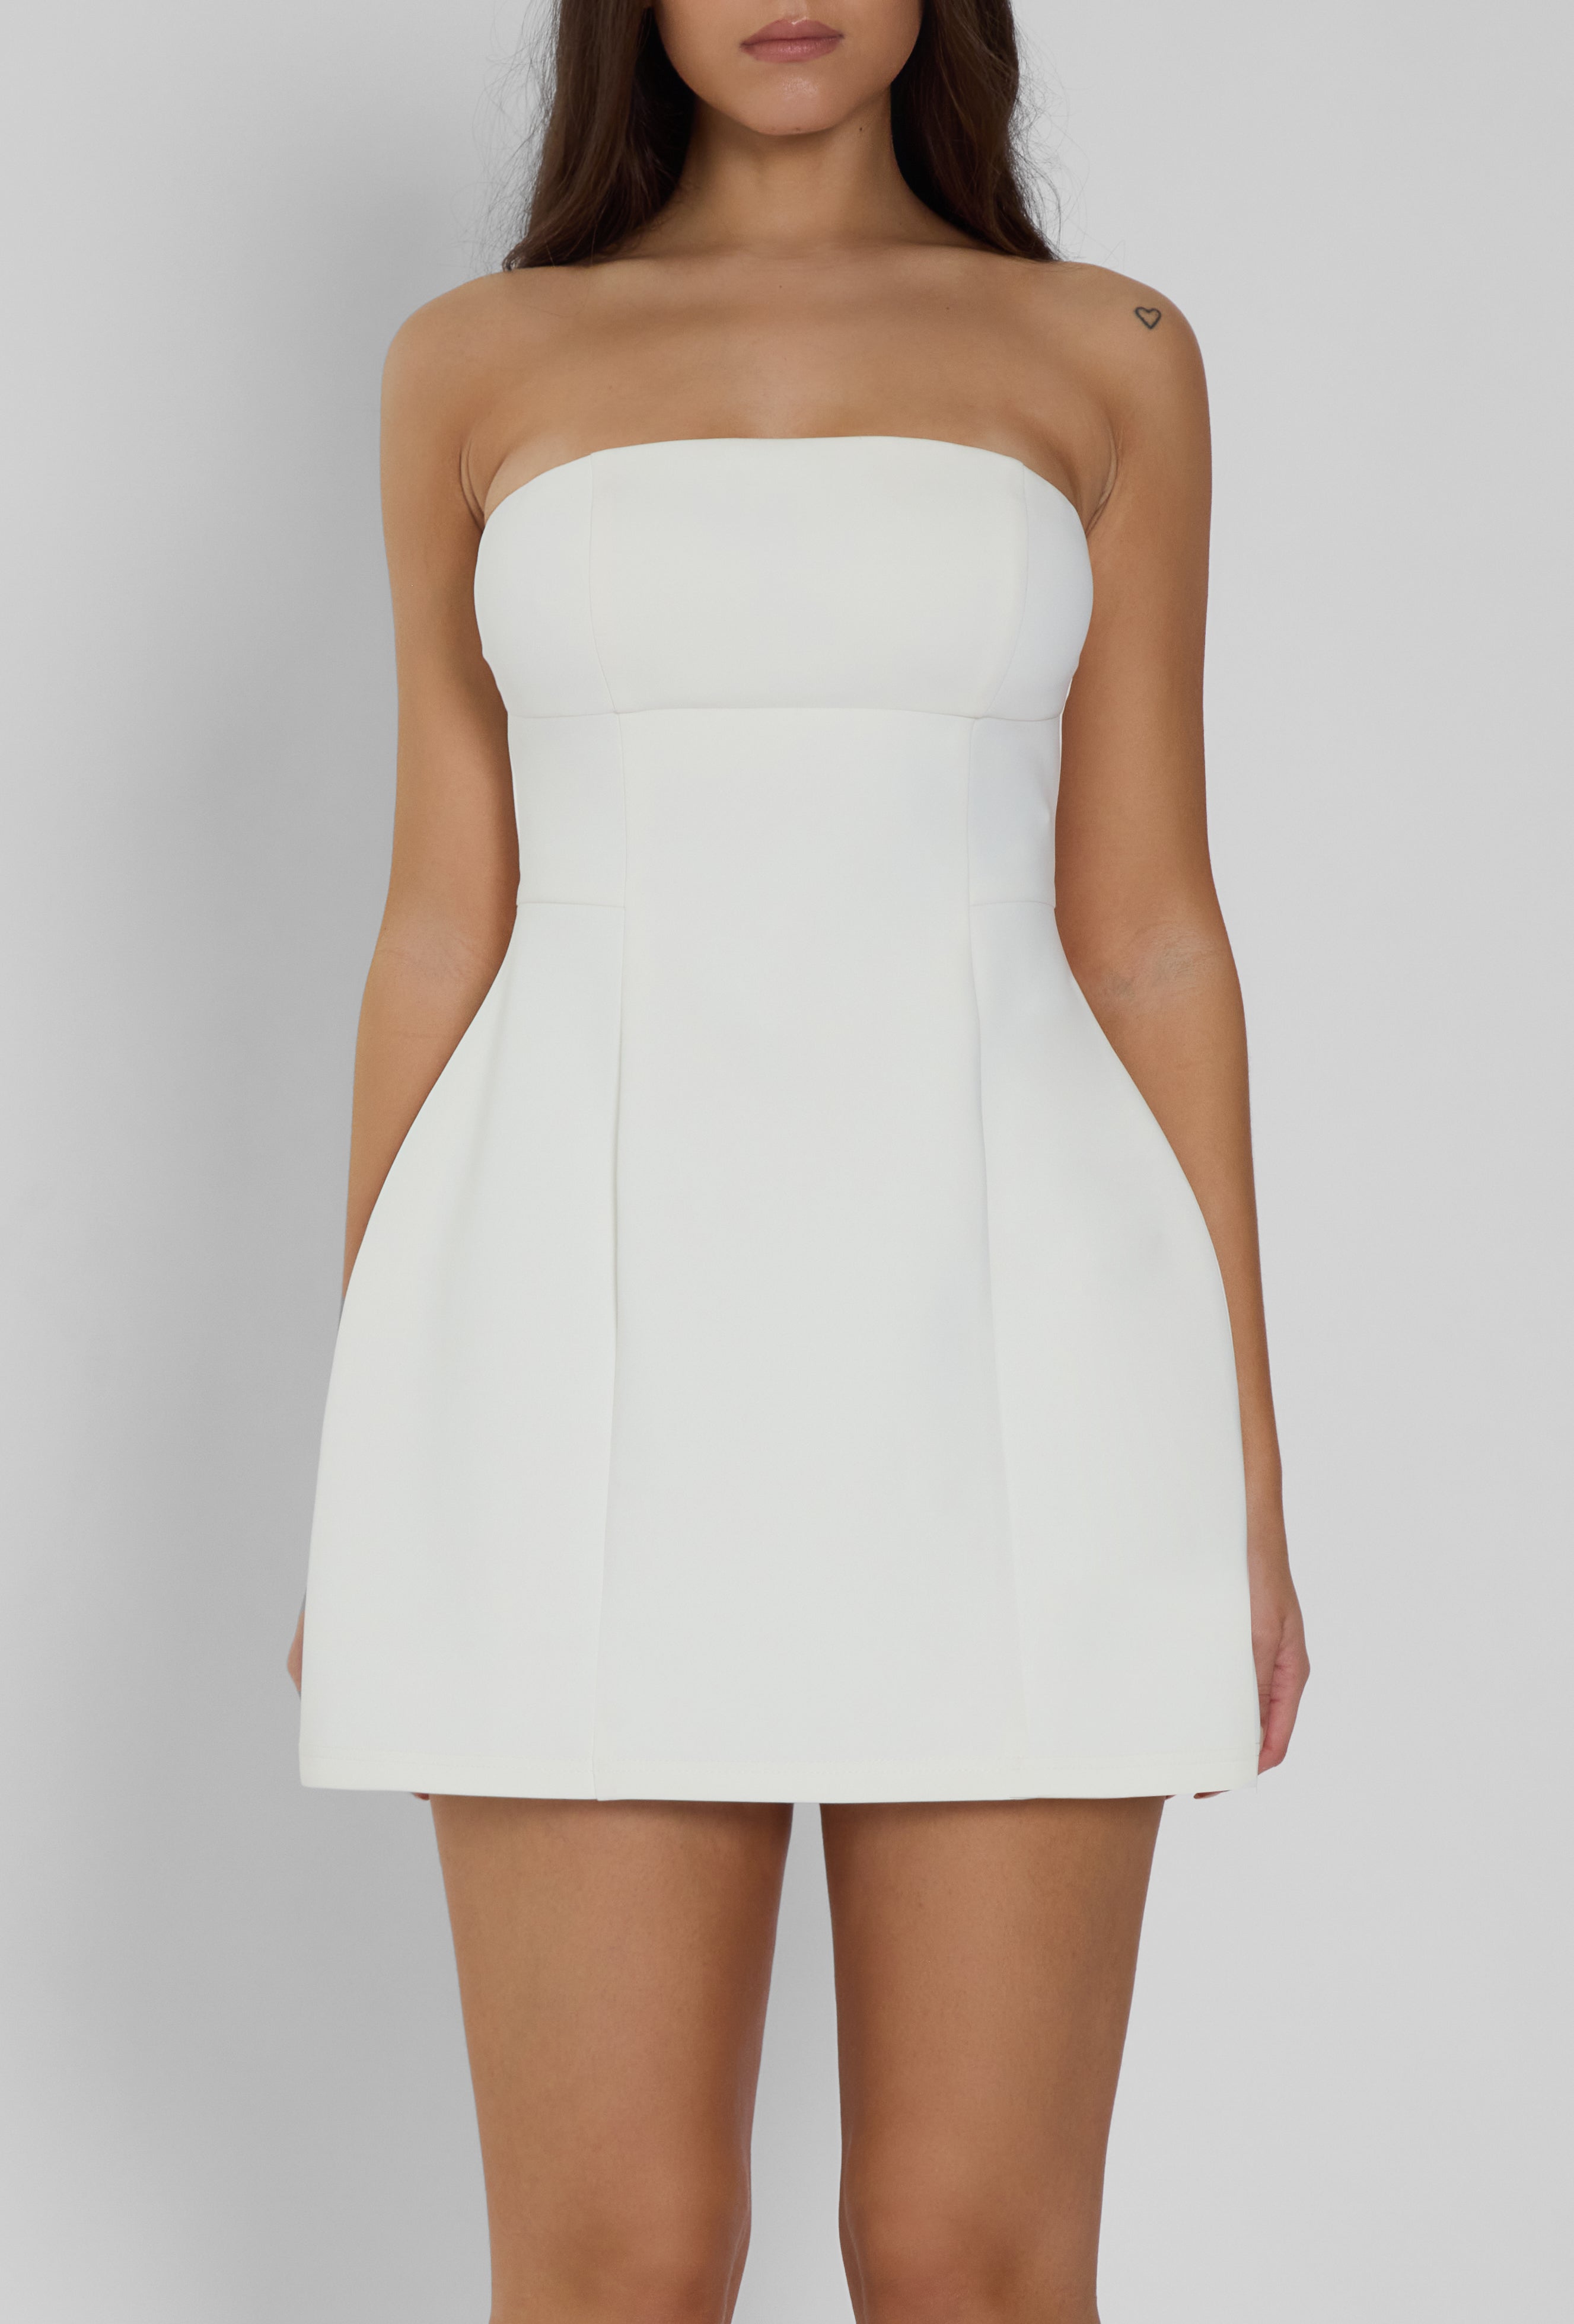 Eres Strapless Bustier Mini Dress - White.